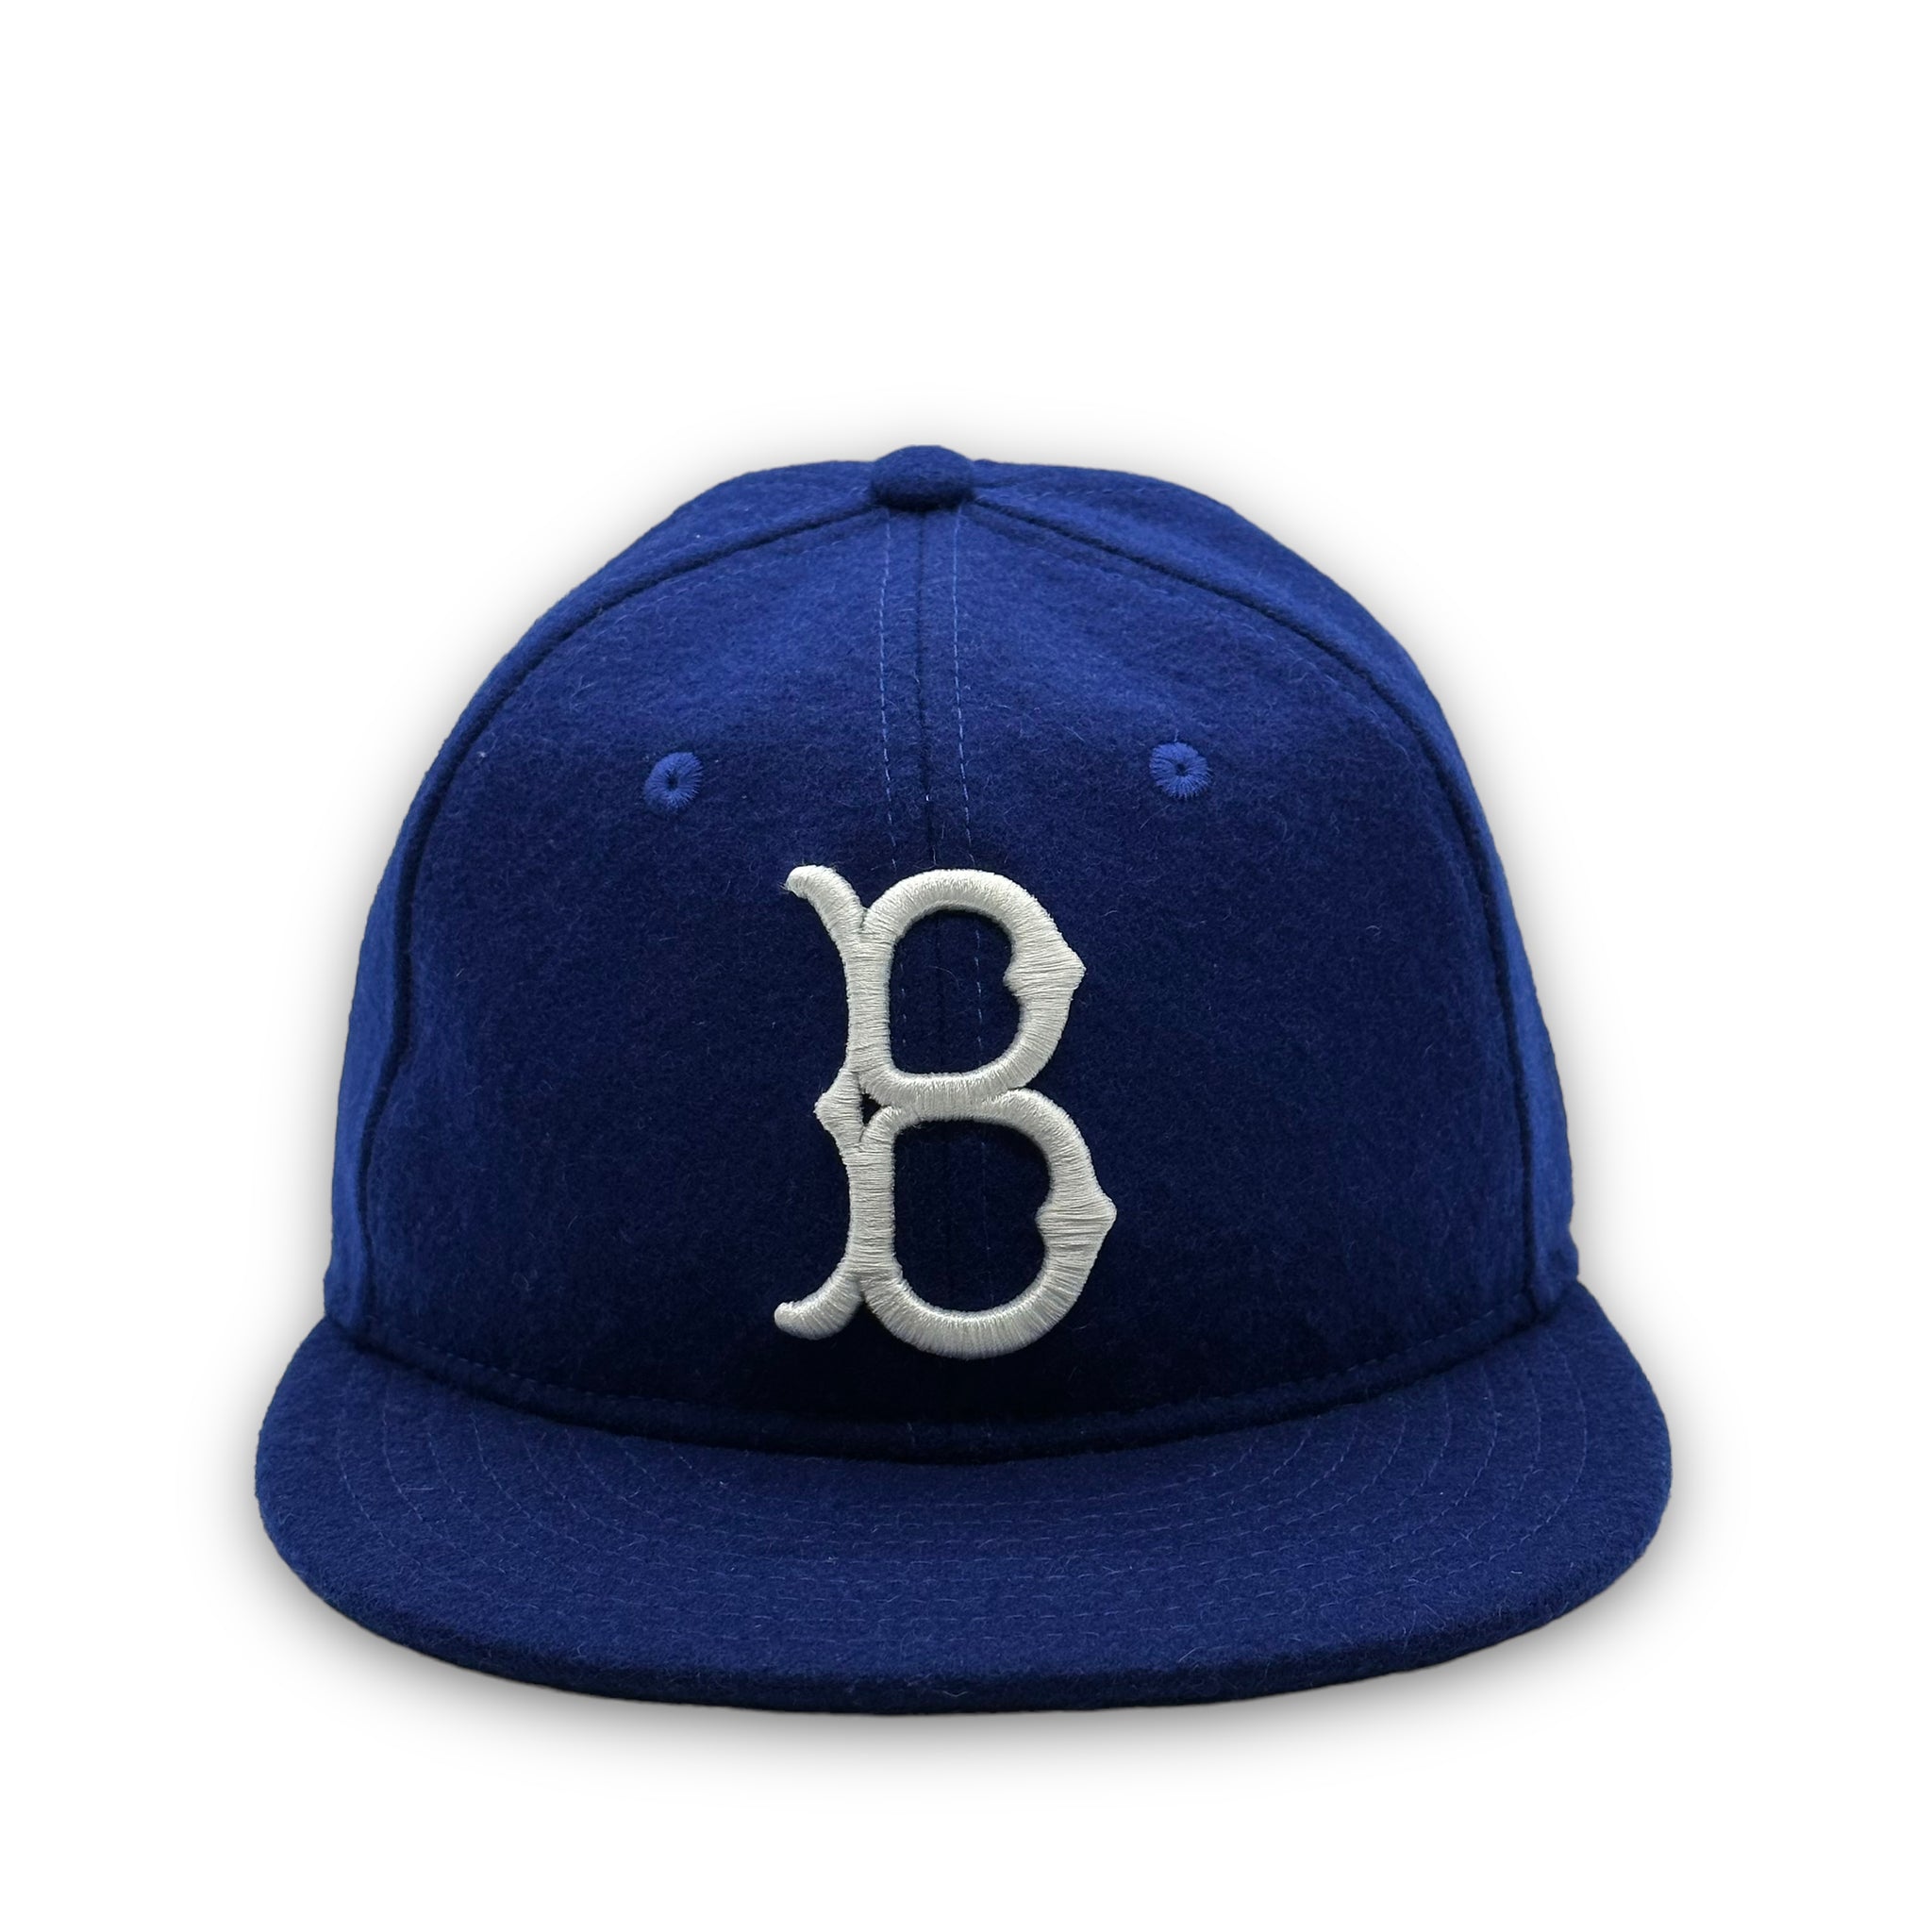 New Era Brooklyn Dodgers Fitted The Cap The Pros Wear – STUDIIYO23